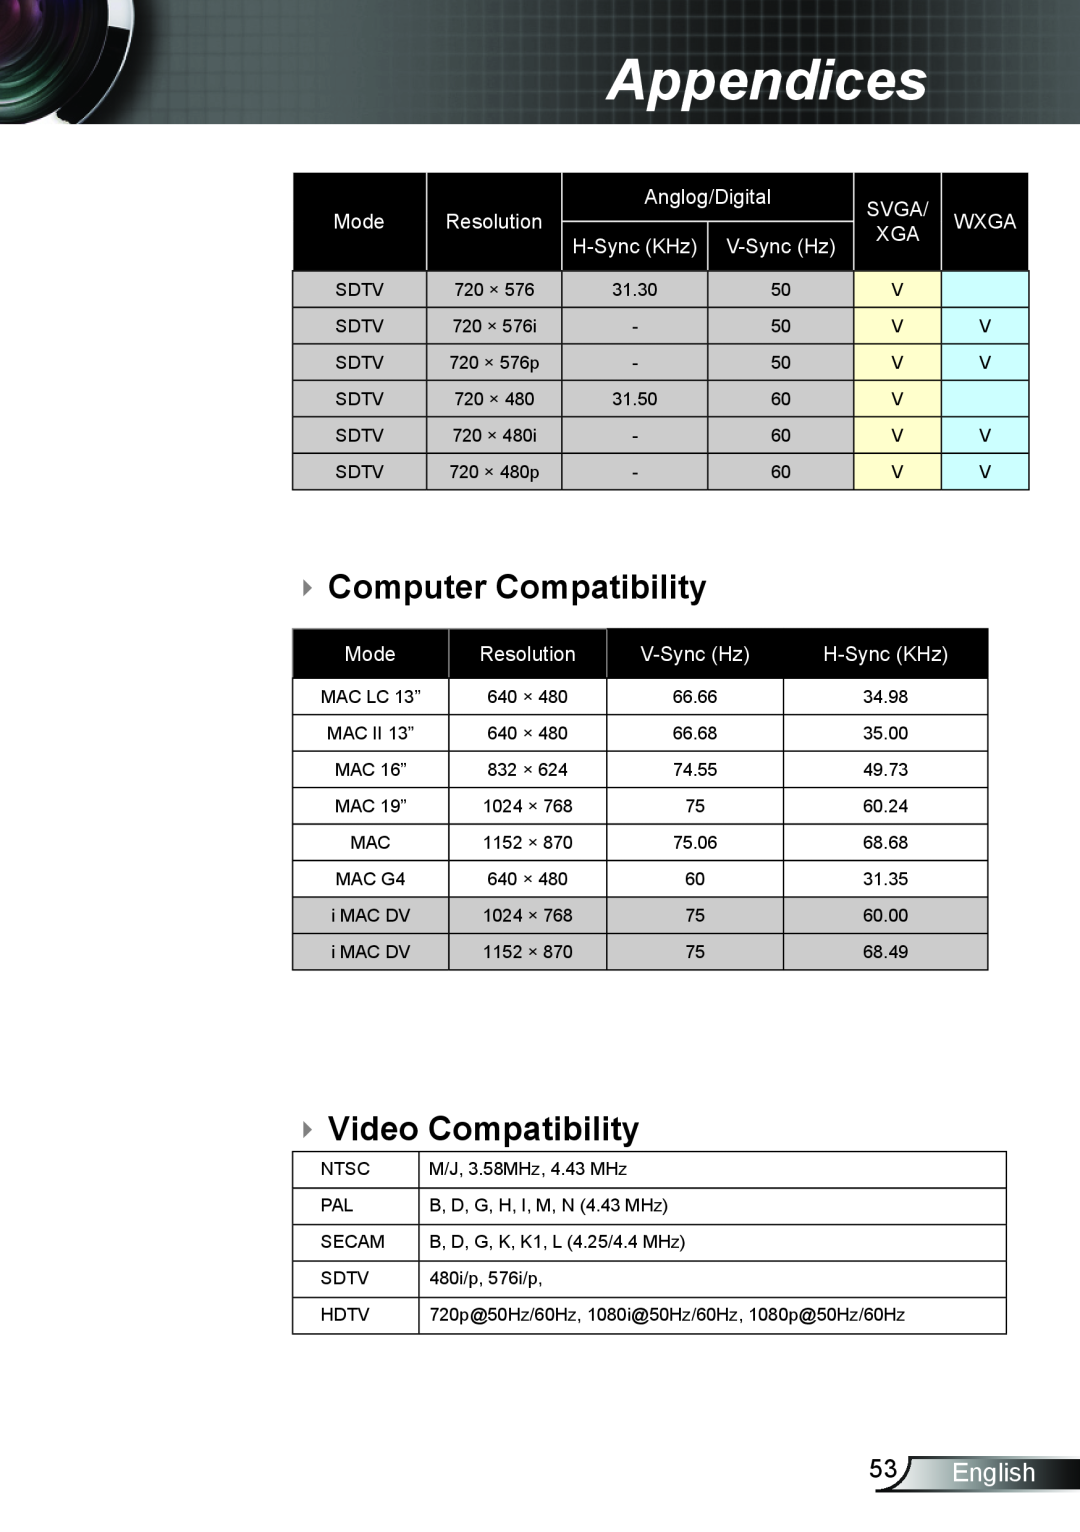 Optoma Technology DX339  Video Compatibility, English, Appendices,  Computer Compatibility, Mode, Resolution, Svga Xga 